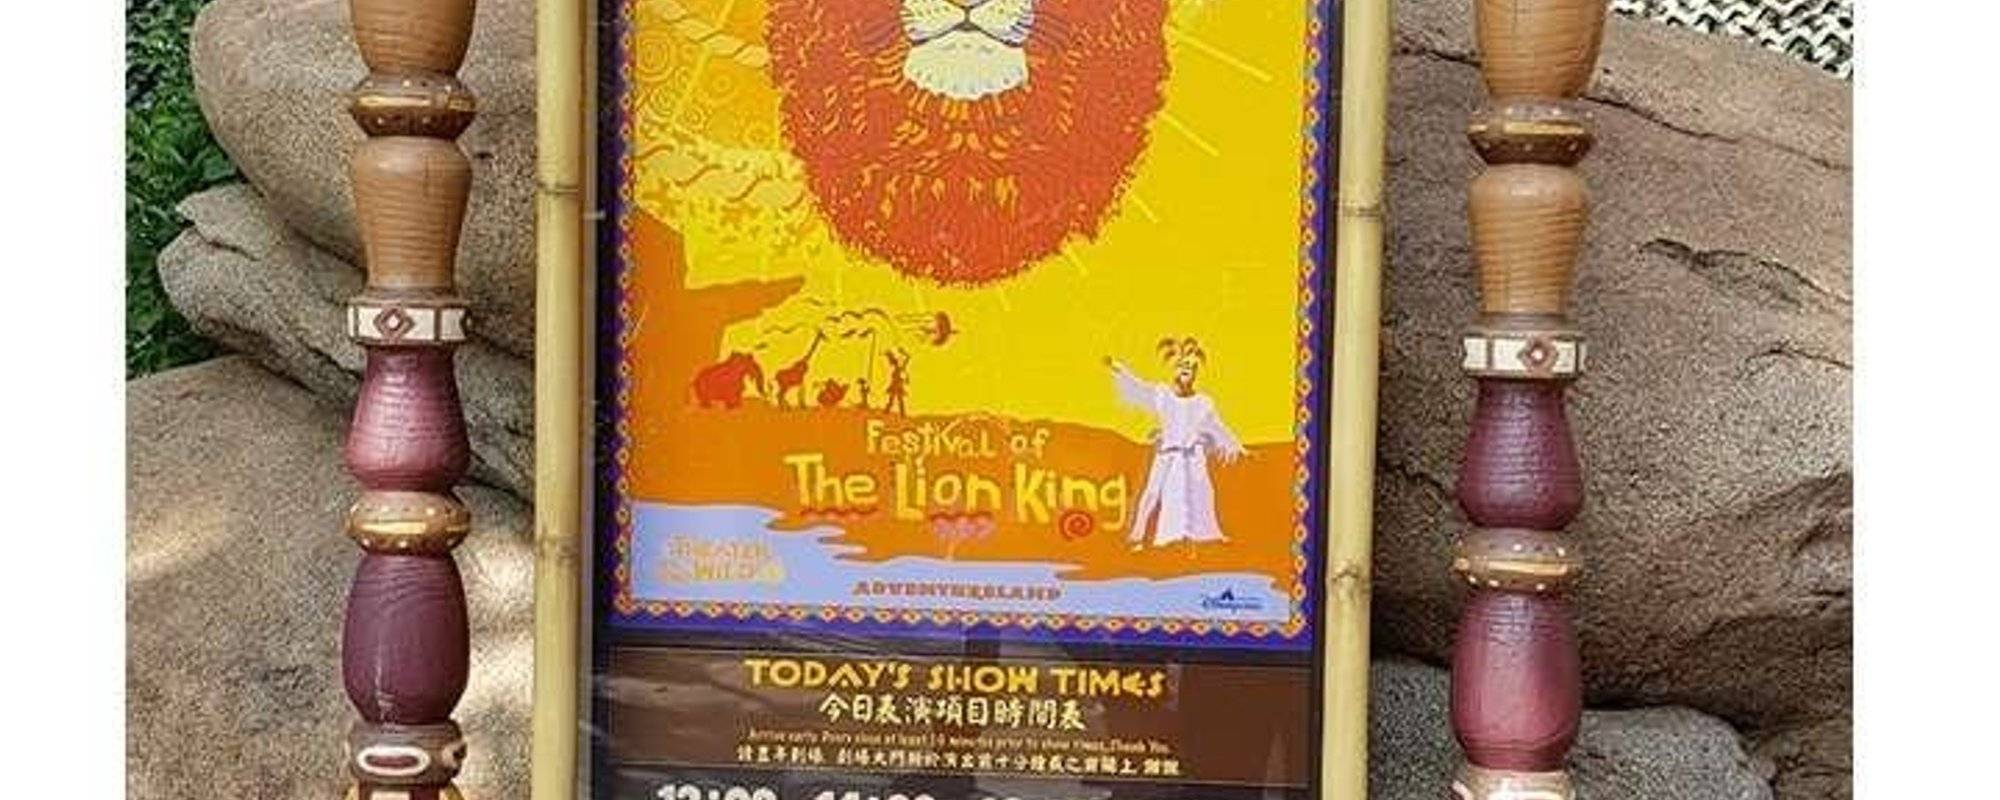 📷✈️Disneyland Hong Kong Lion King show | 香港迪士尼乐园狮子王秀 HK044 (by @ace108)